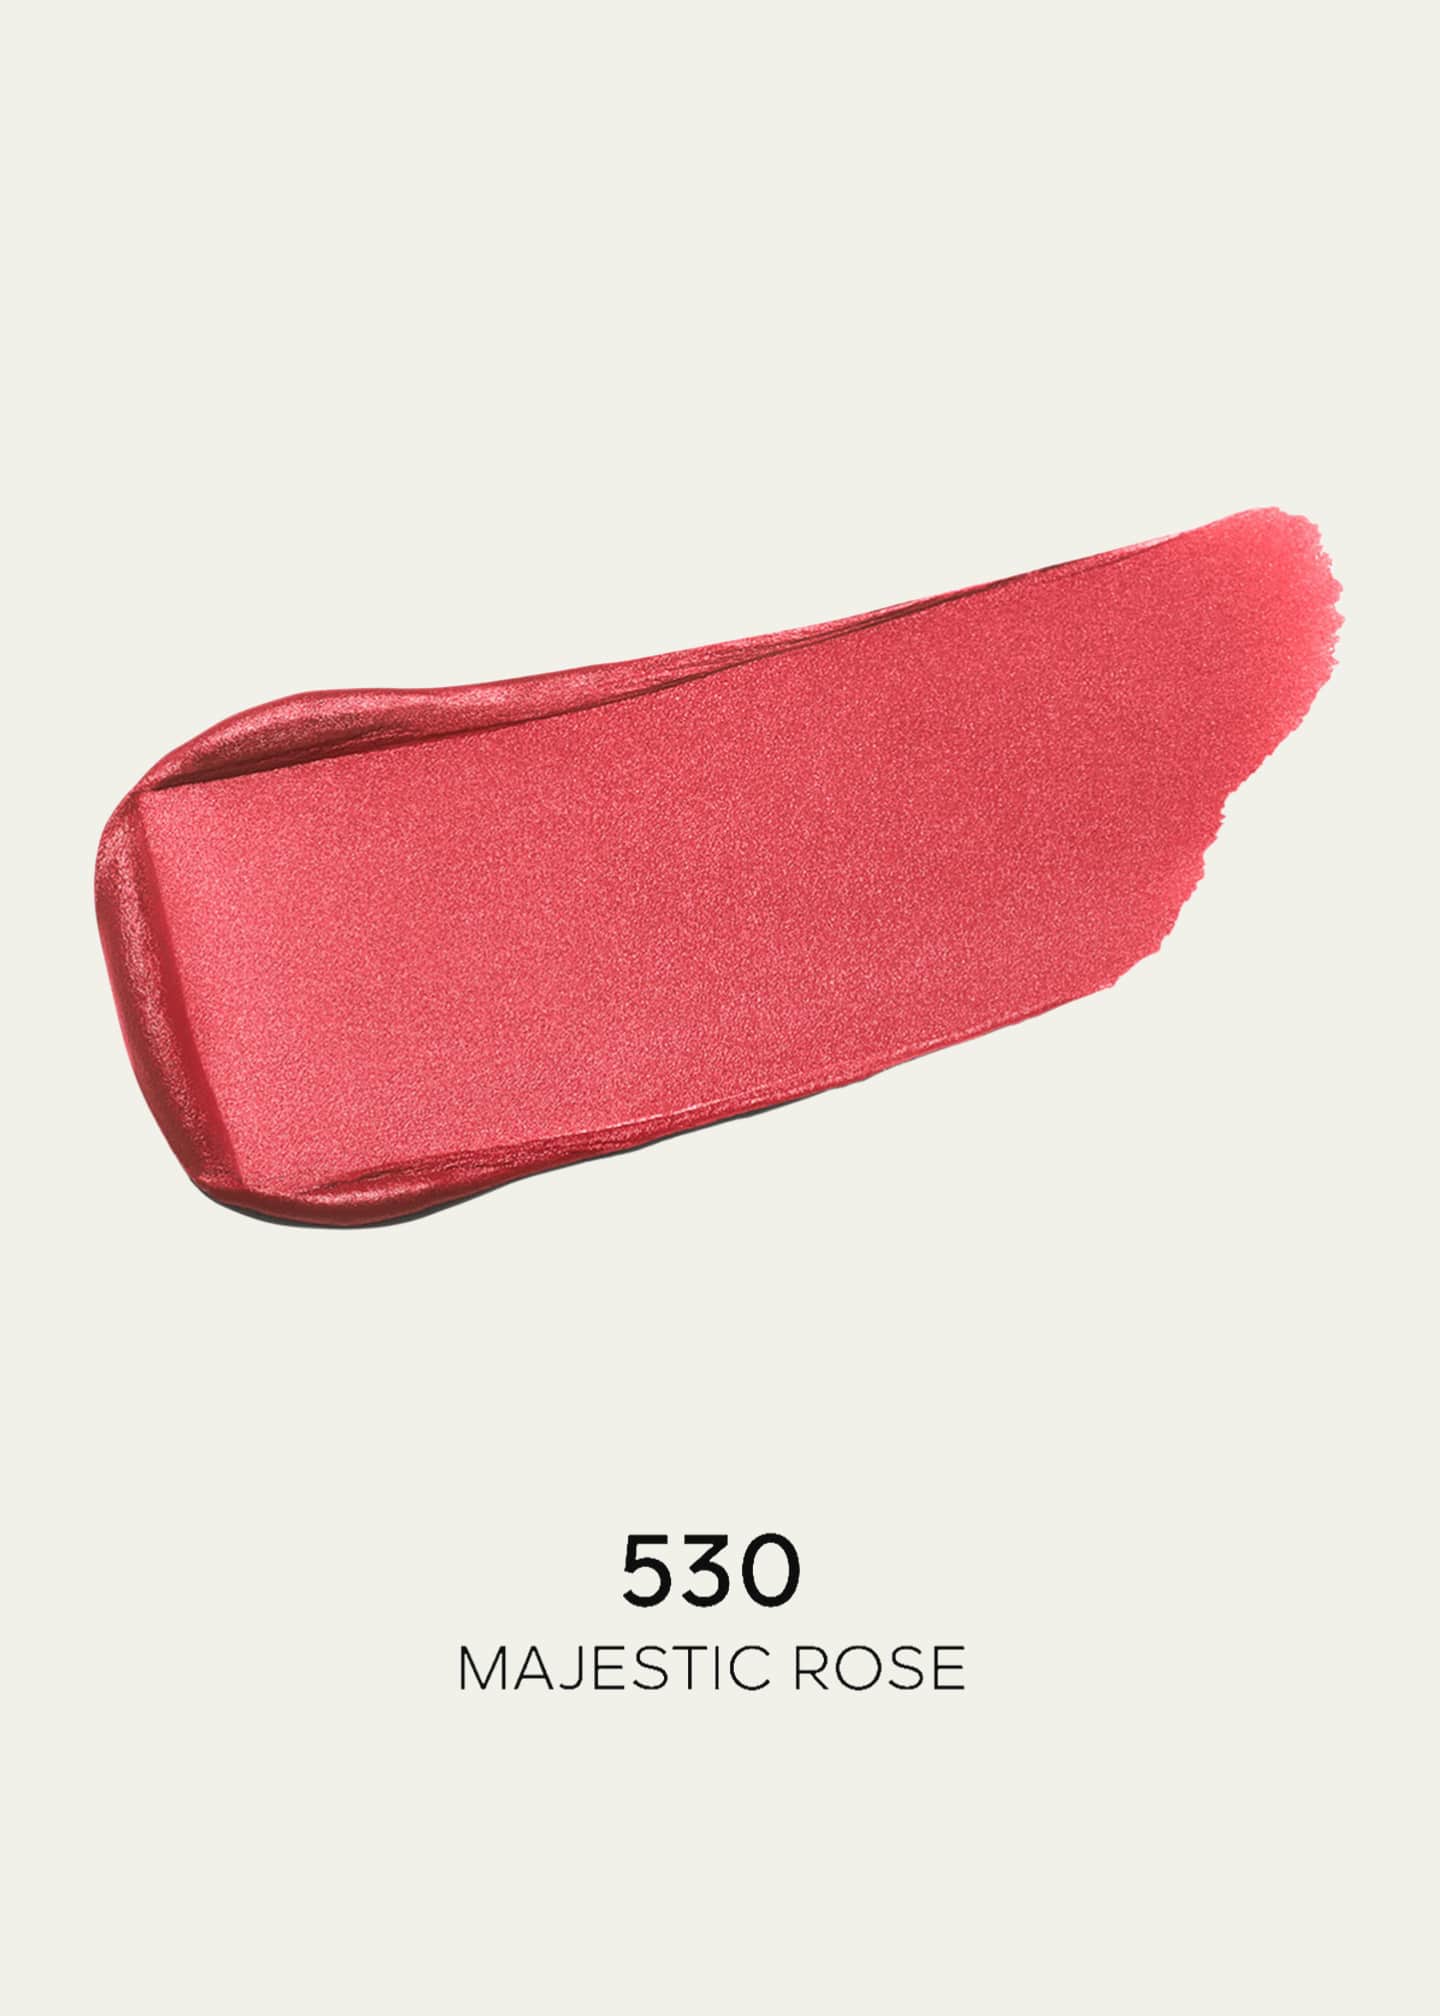 Guerlain Rouge G Customizable Luxurious Velvet Matte Lipstick